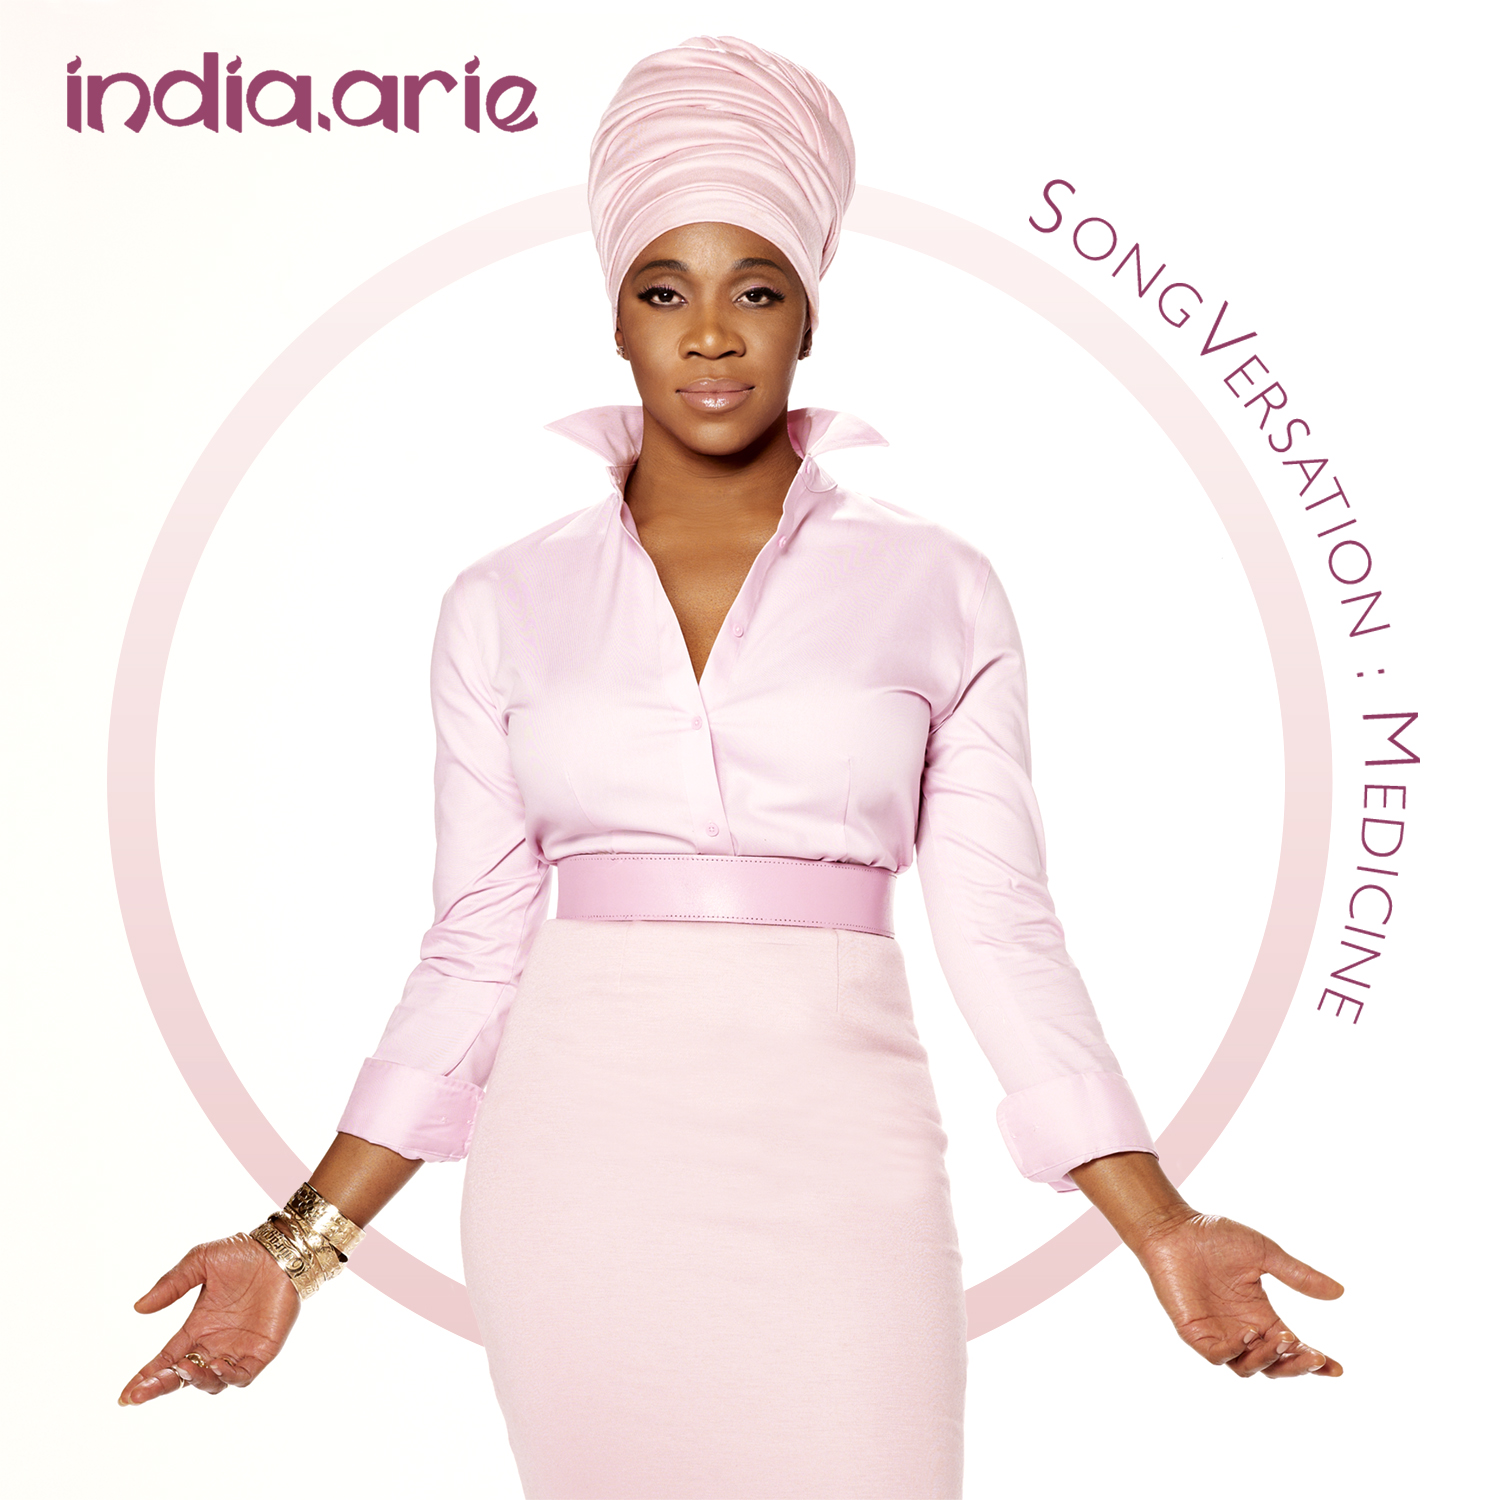 India Arie Announces Release of "Songversation: Medicine" EP